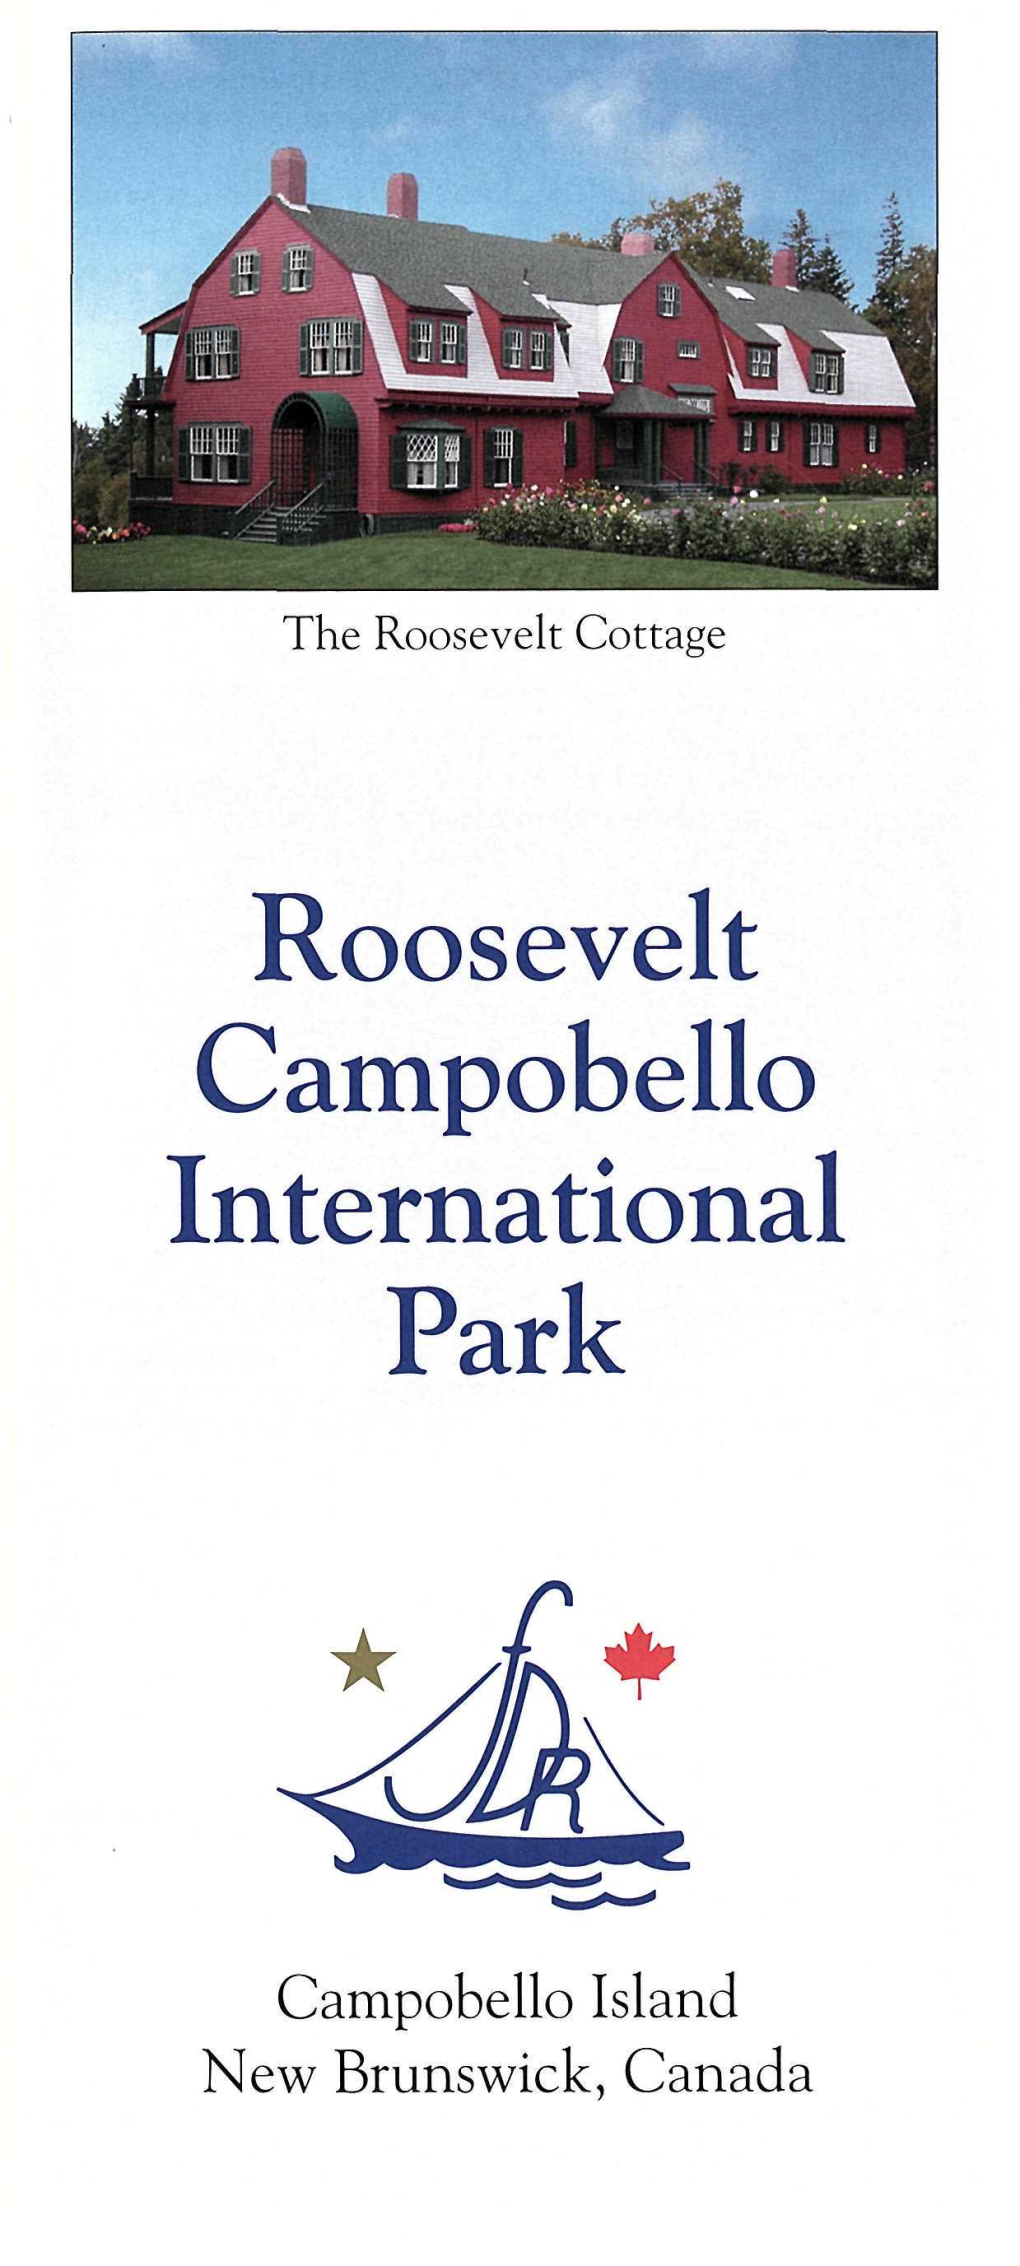 Roosevelt Campobello International Park